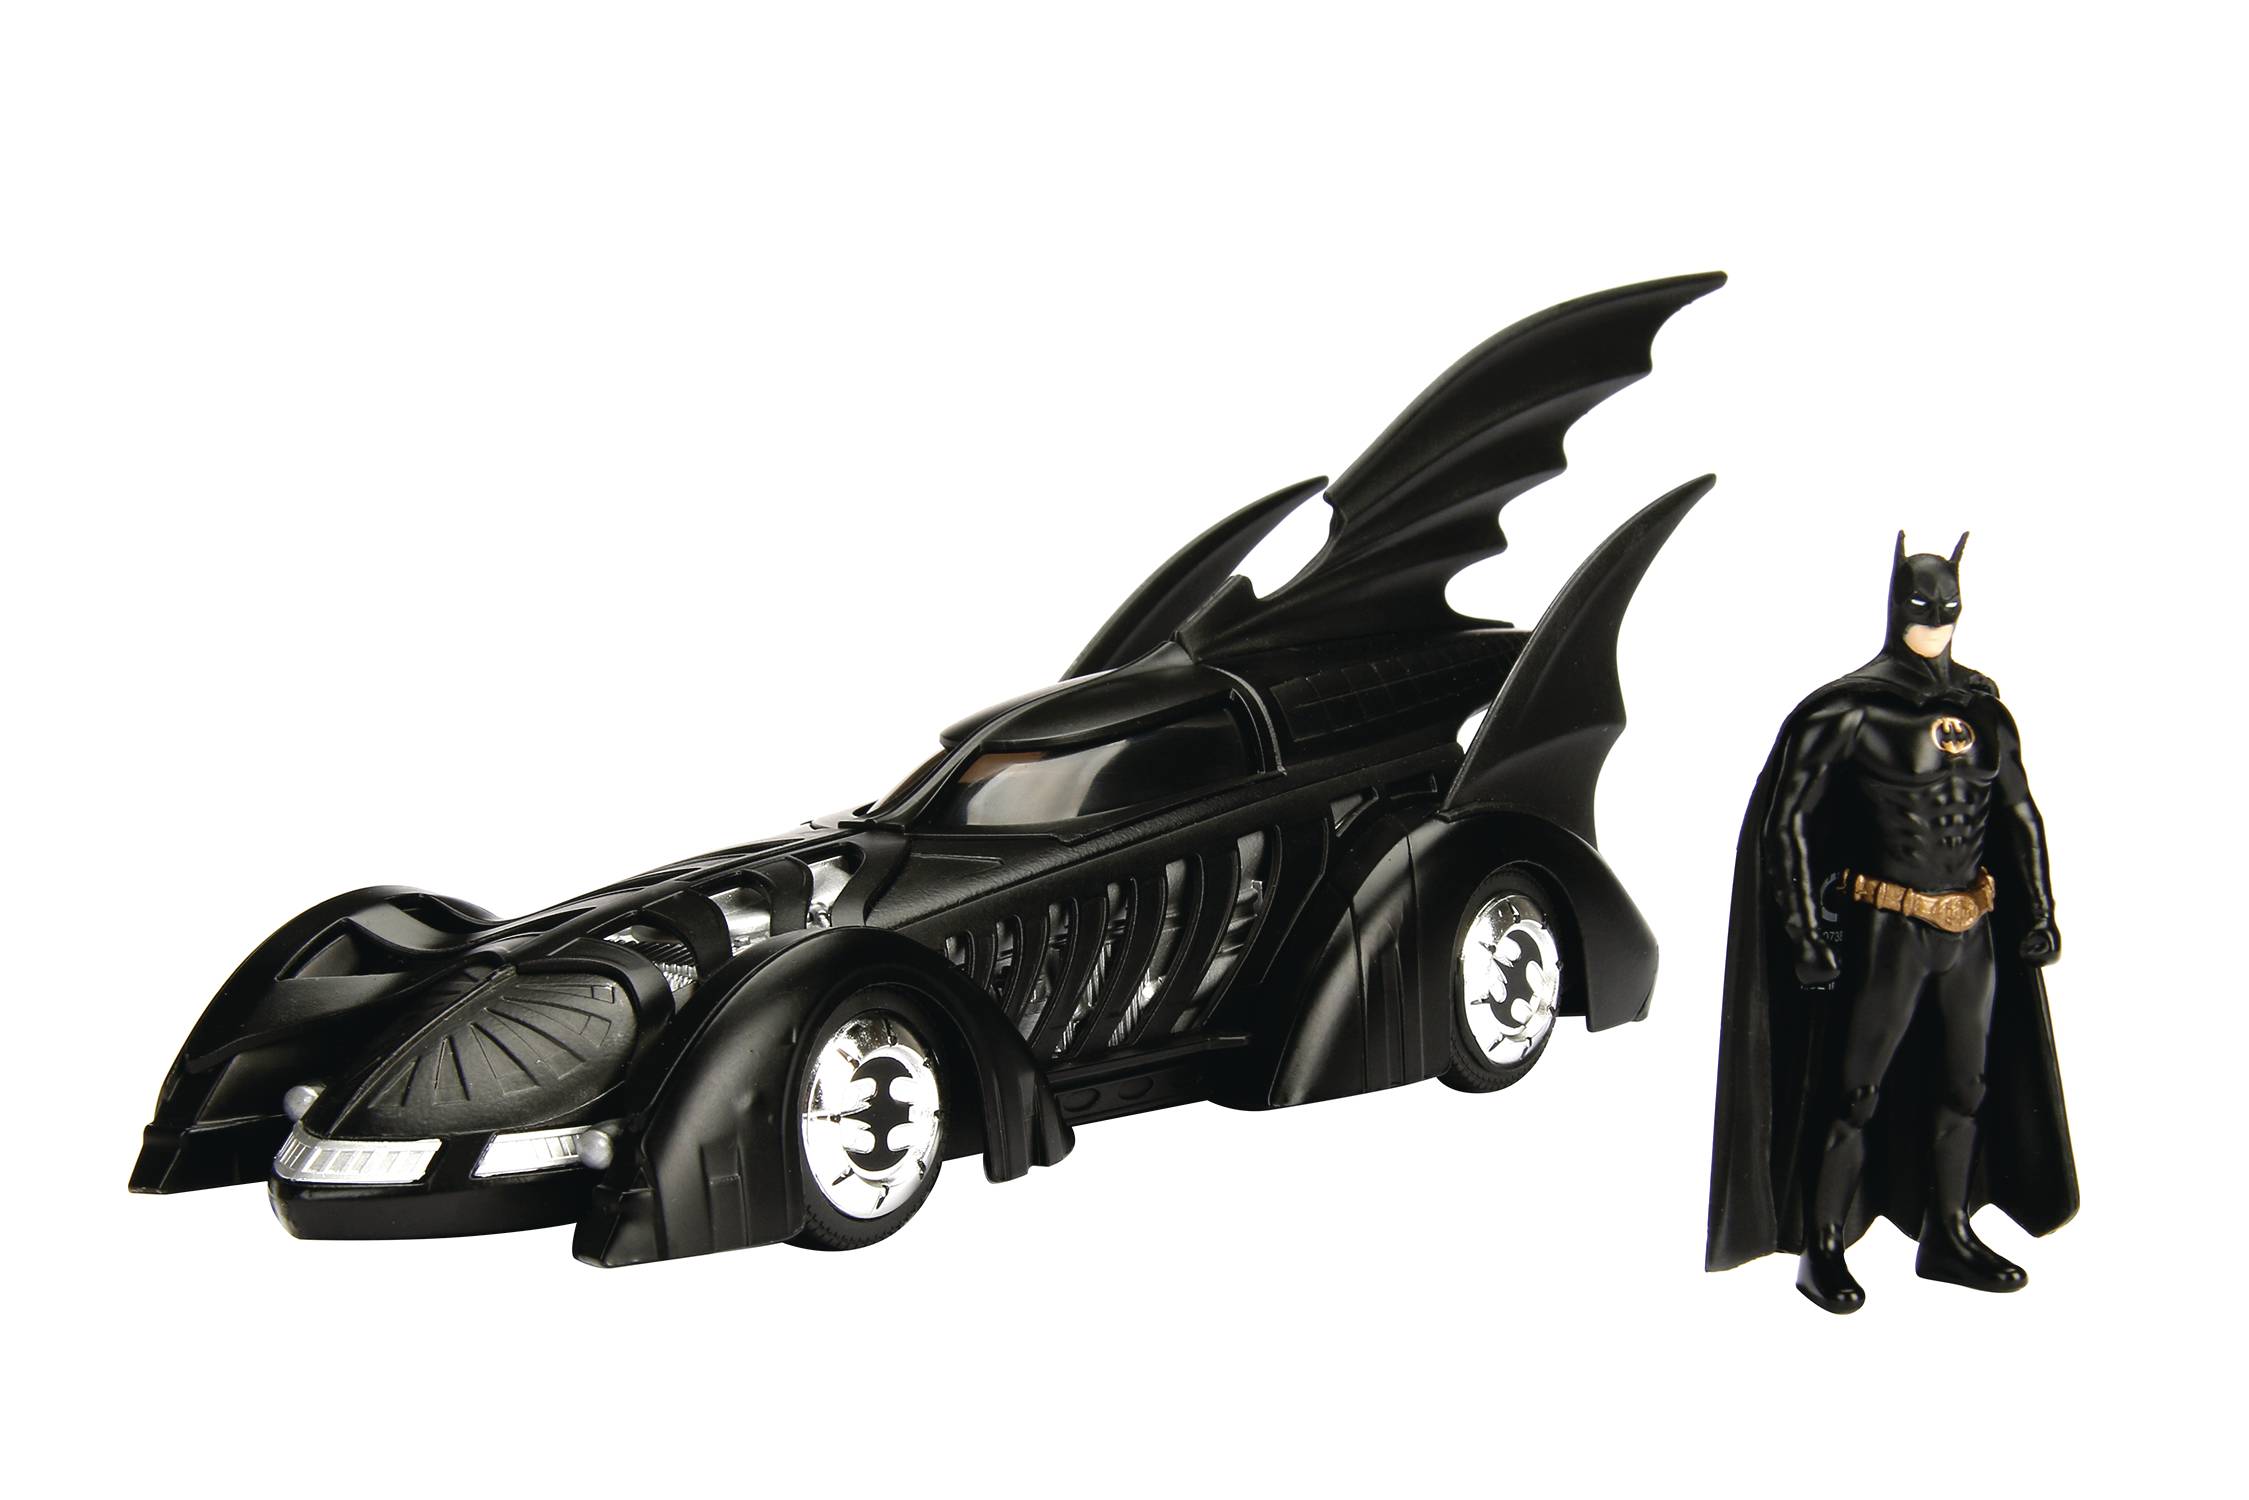 Figurine Batman + Batmobile